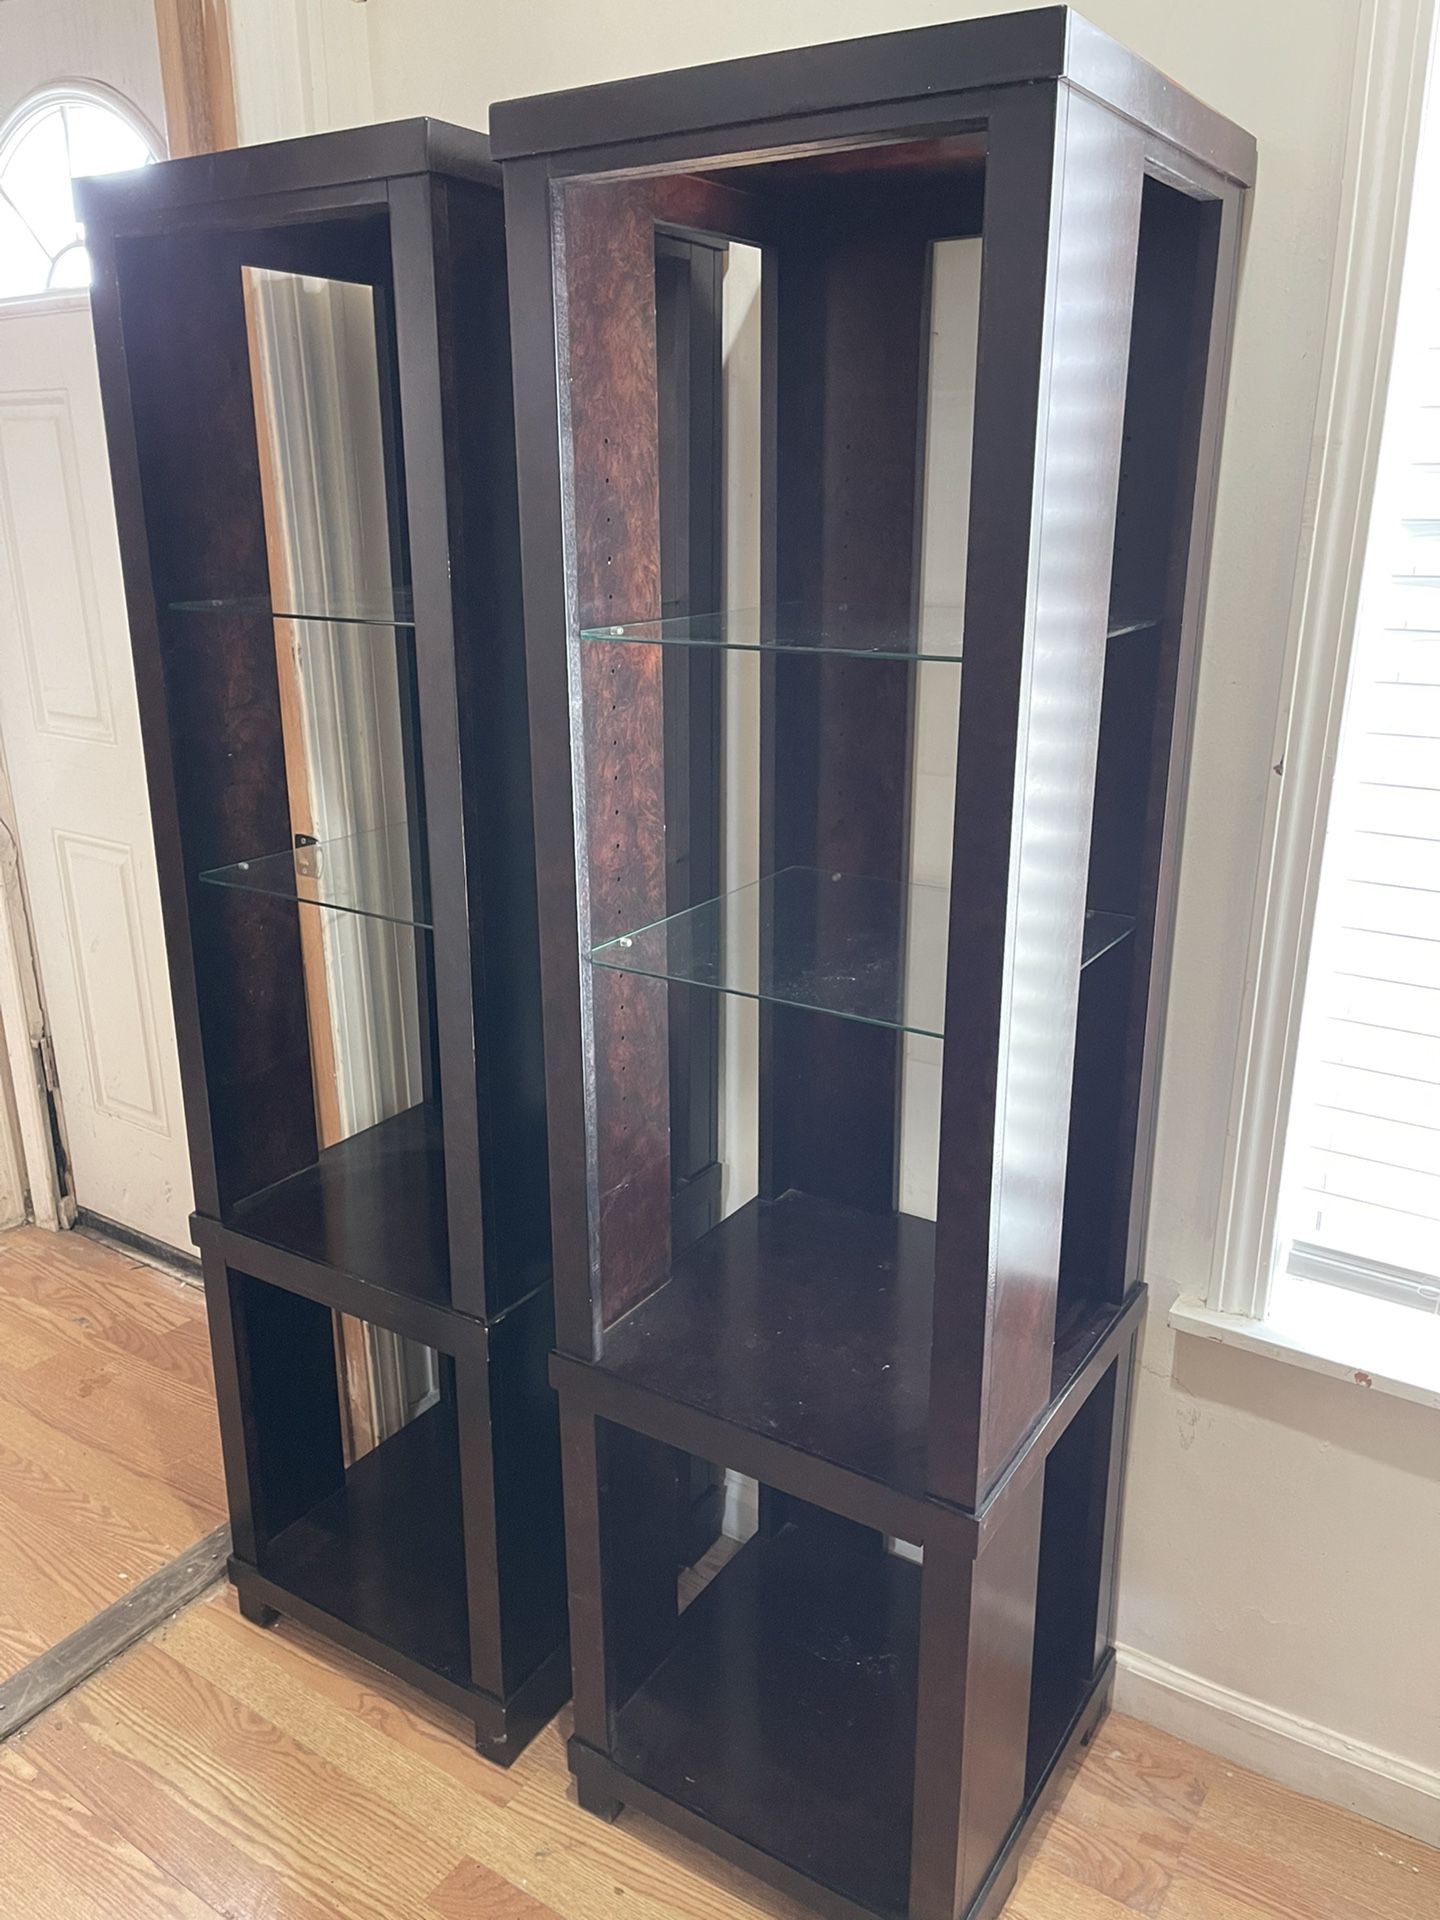 2x Tall Brown Wooden Bookshelves With Glass Shelves